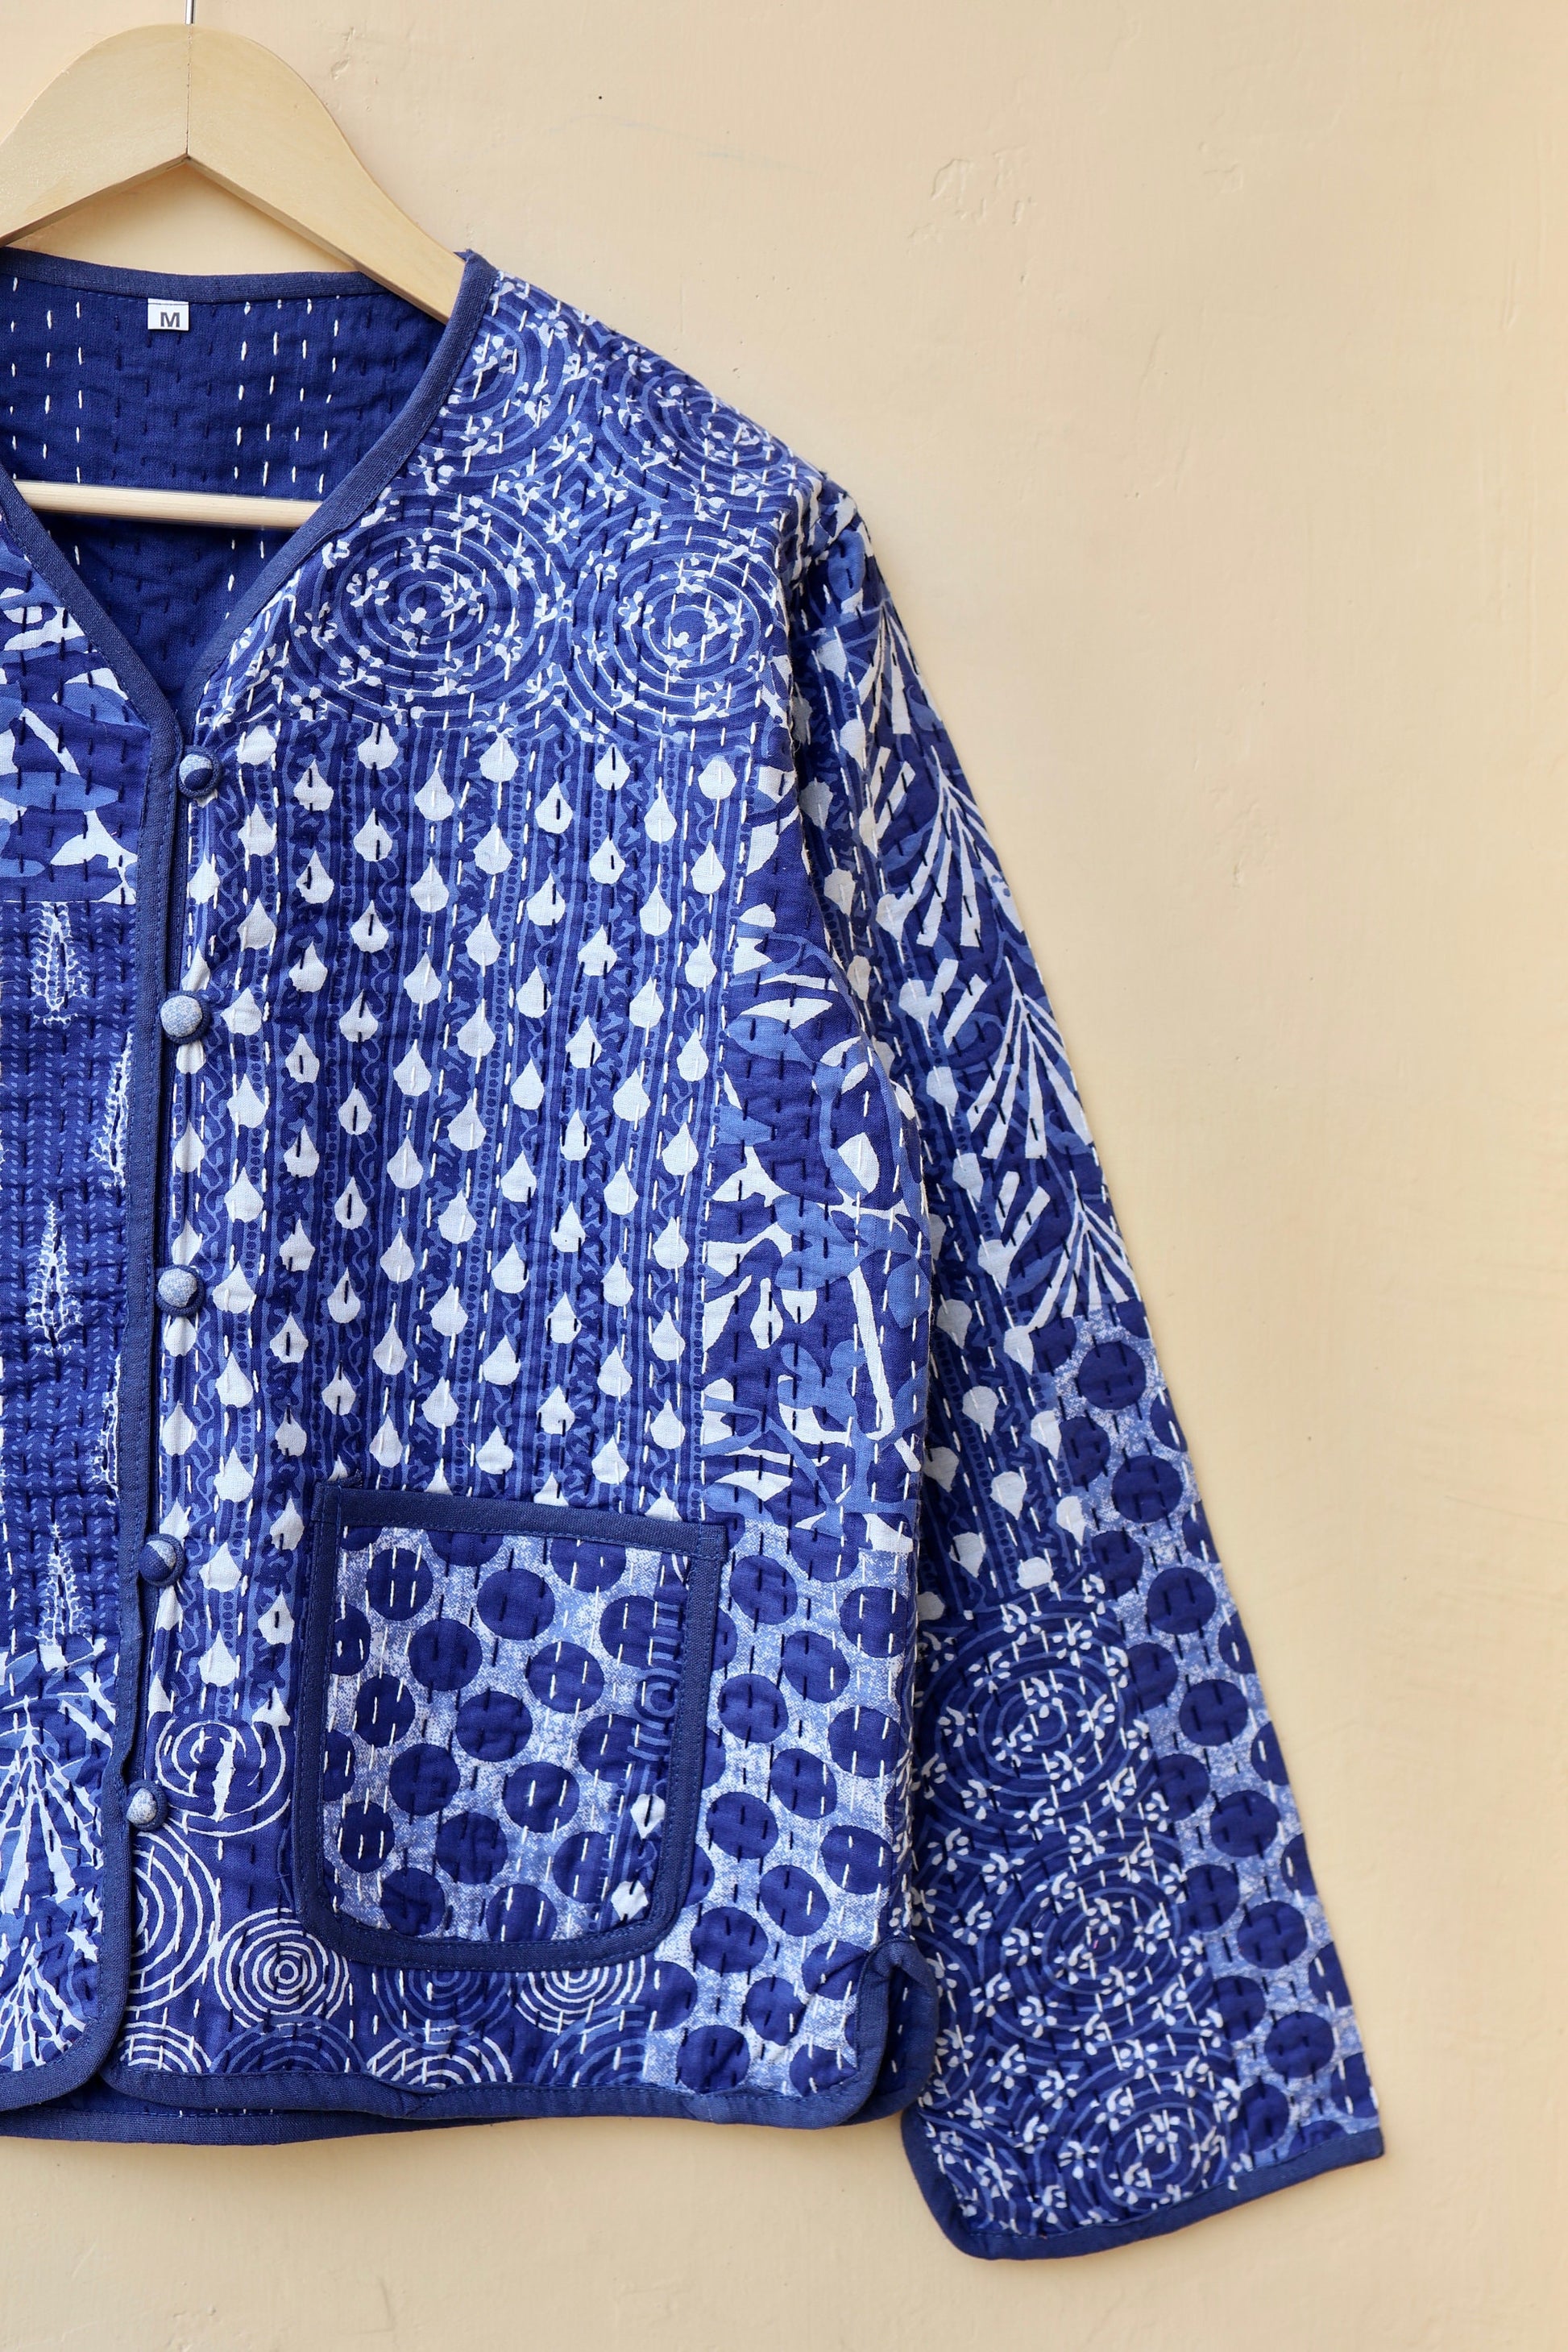 Indigo Patchwork Kantha Quilted Jacket, Indian Handmade Stylish Blue Patchwork Women's Coat, Winter Spring Reversible Kantha Jacket for Her